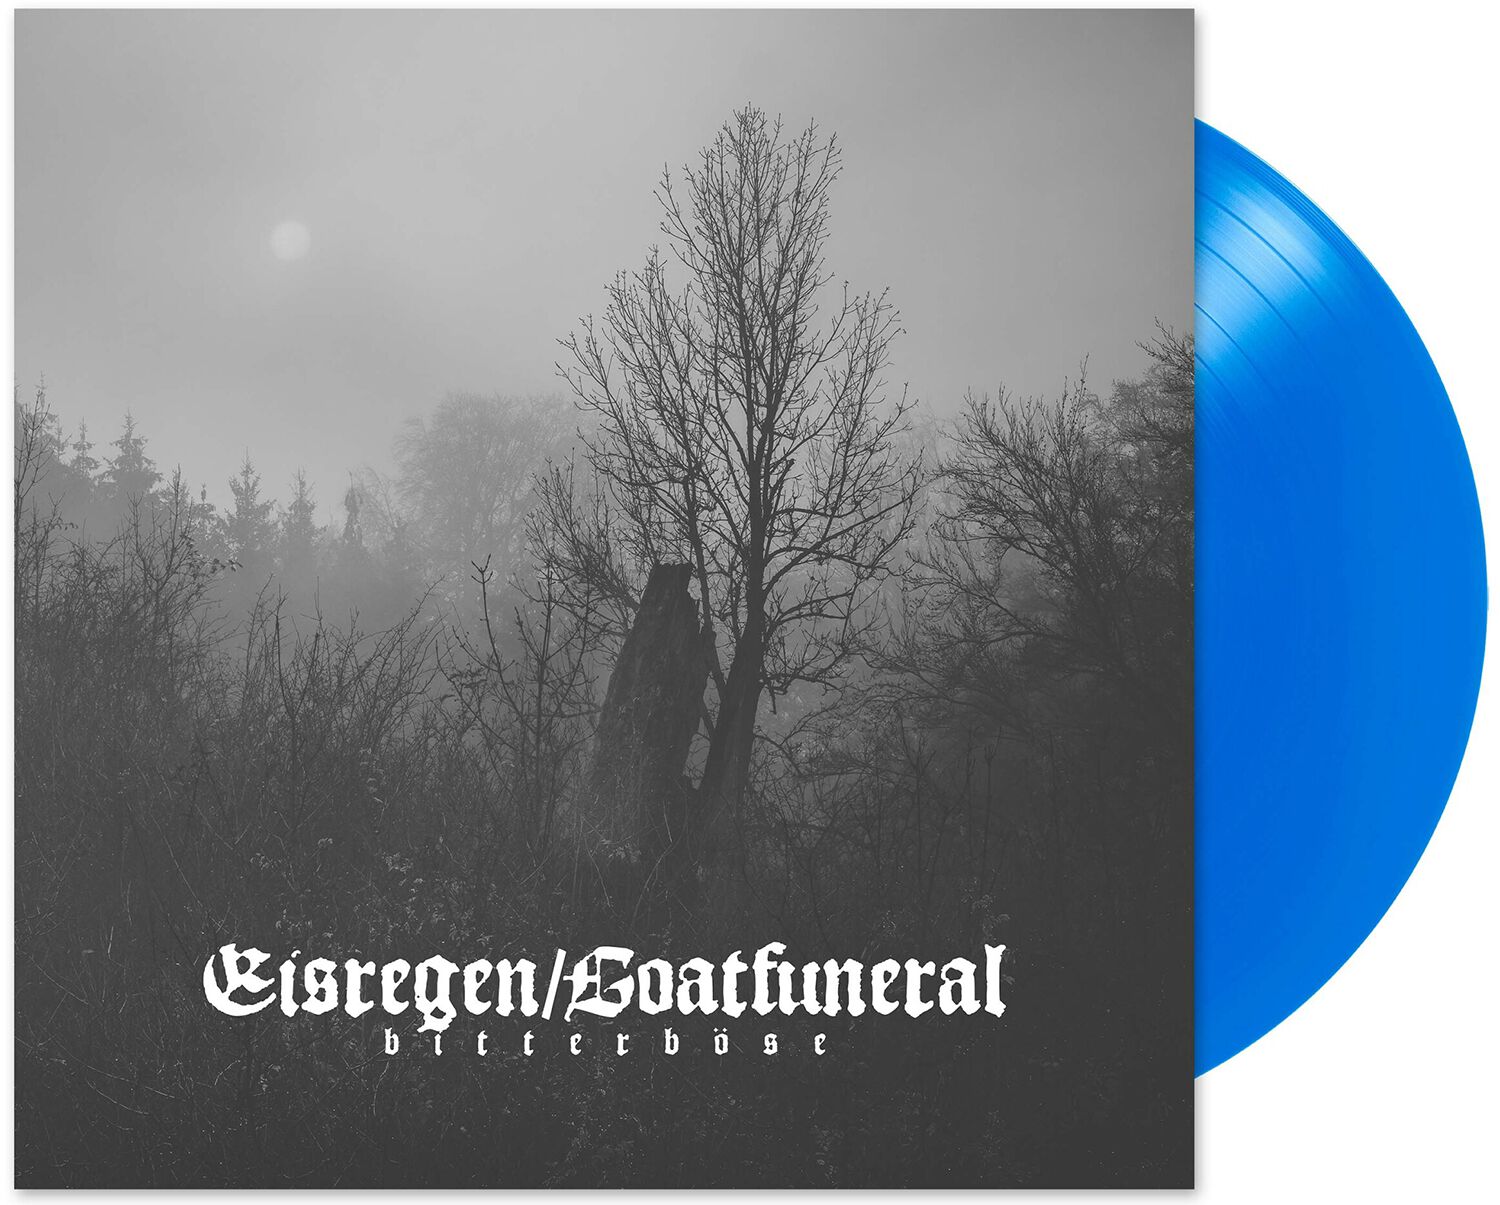 Image of Eisregen / Goatfuneral bitterböse LP blau